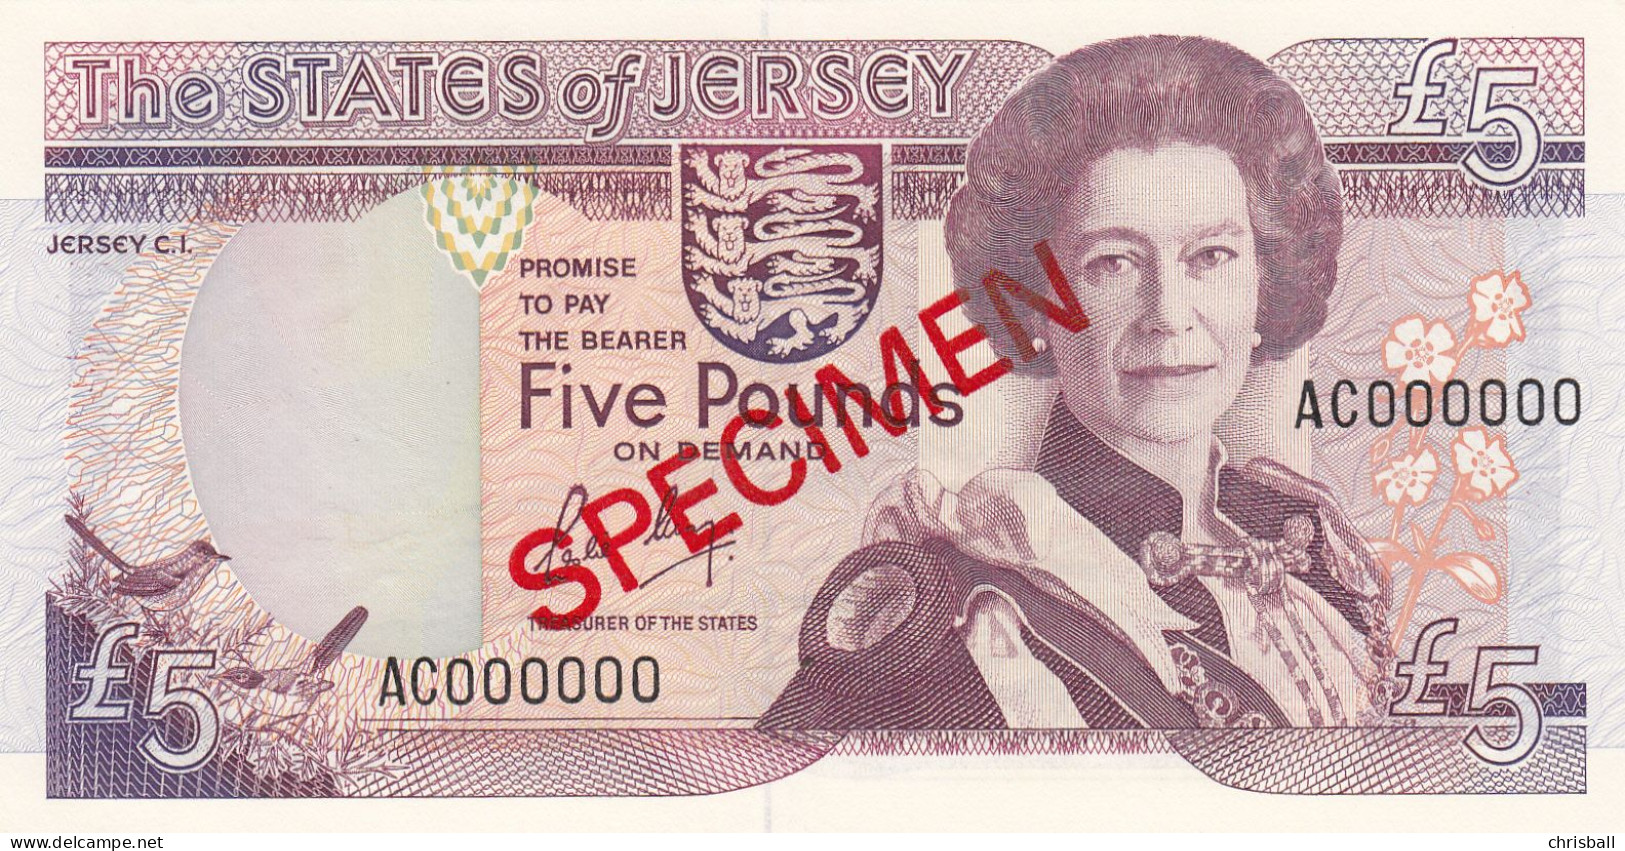 Jersey Banknote Five Pound  SPECIMEN Overprint Code AC - Superb UNC Condition - Jersey